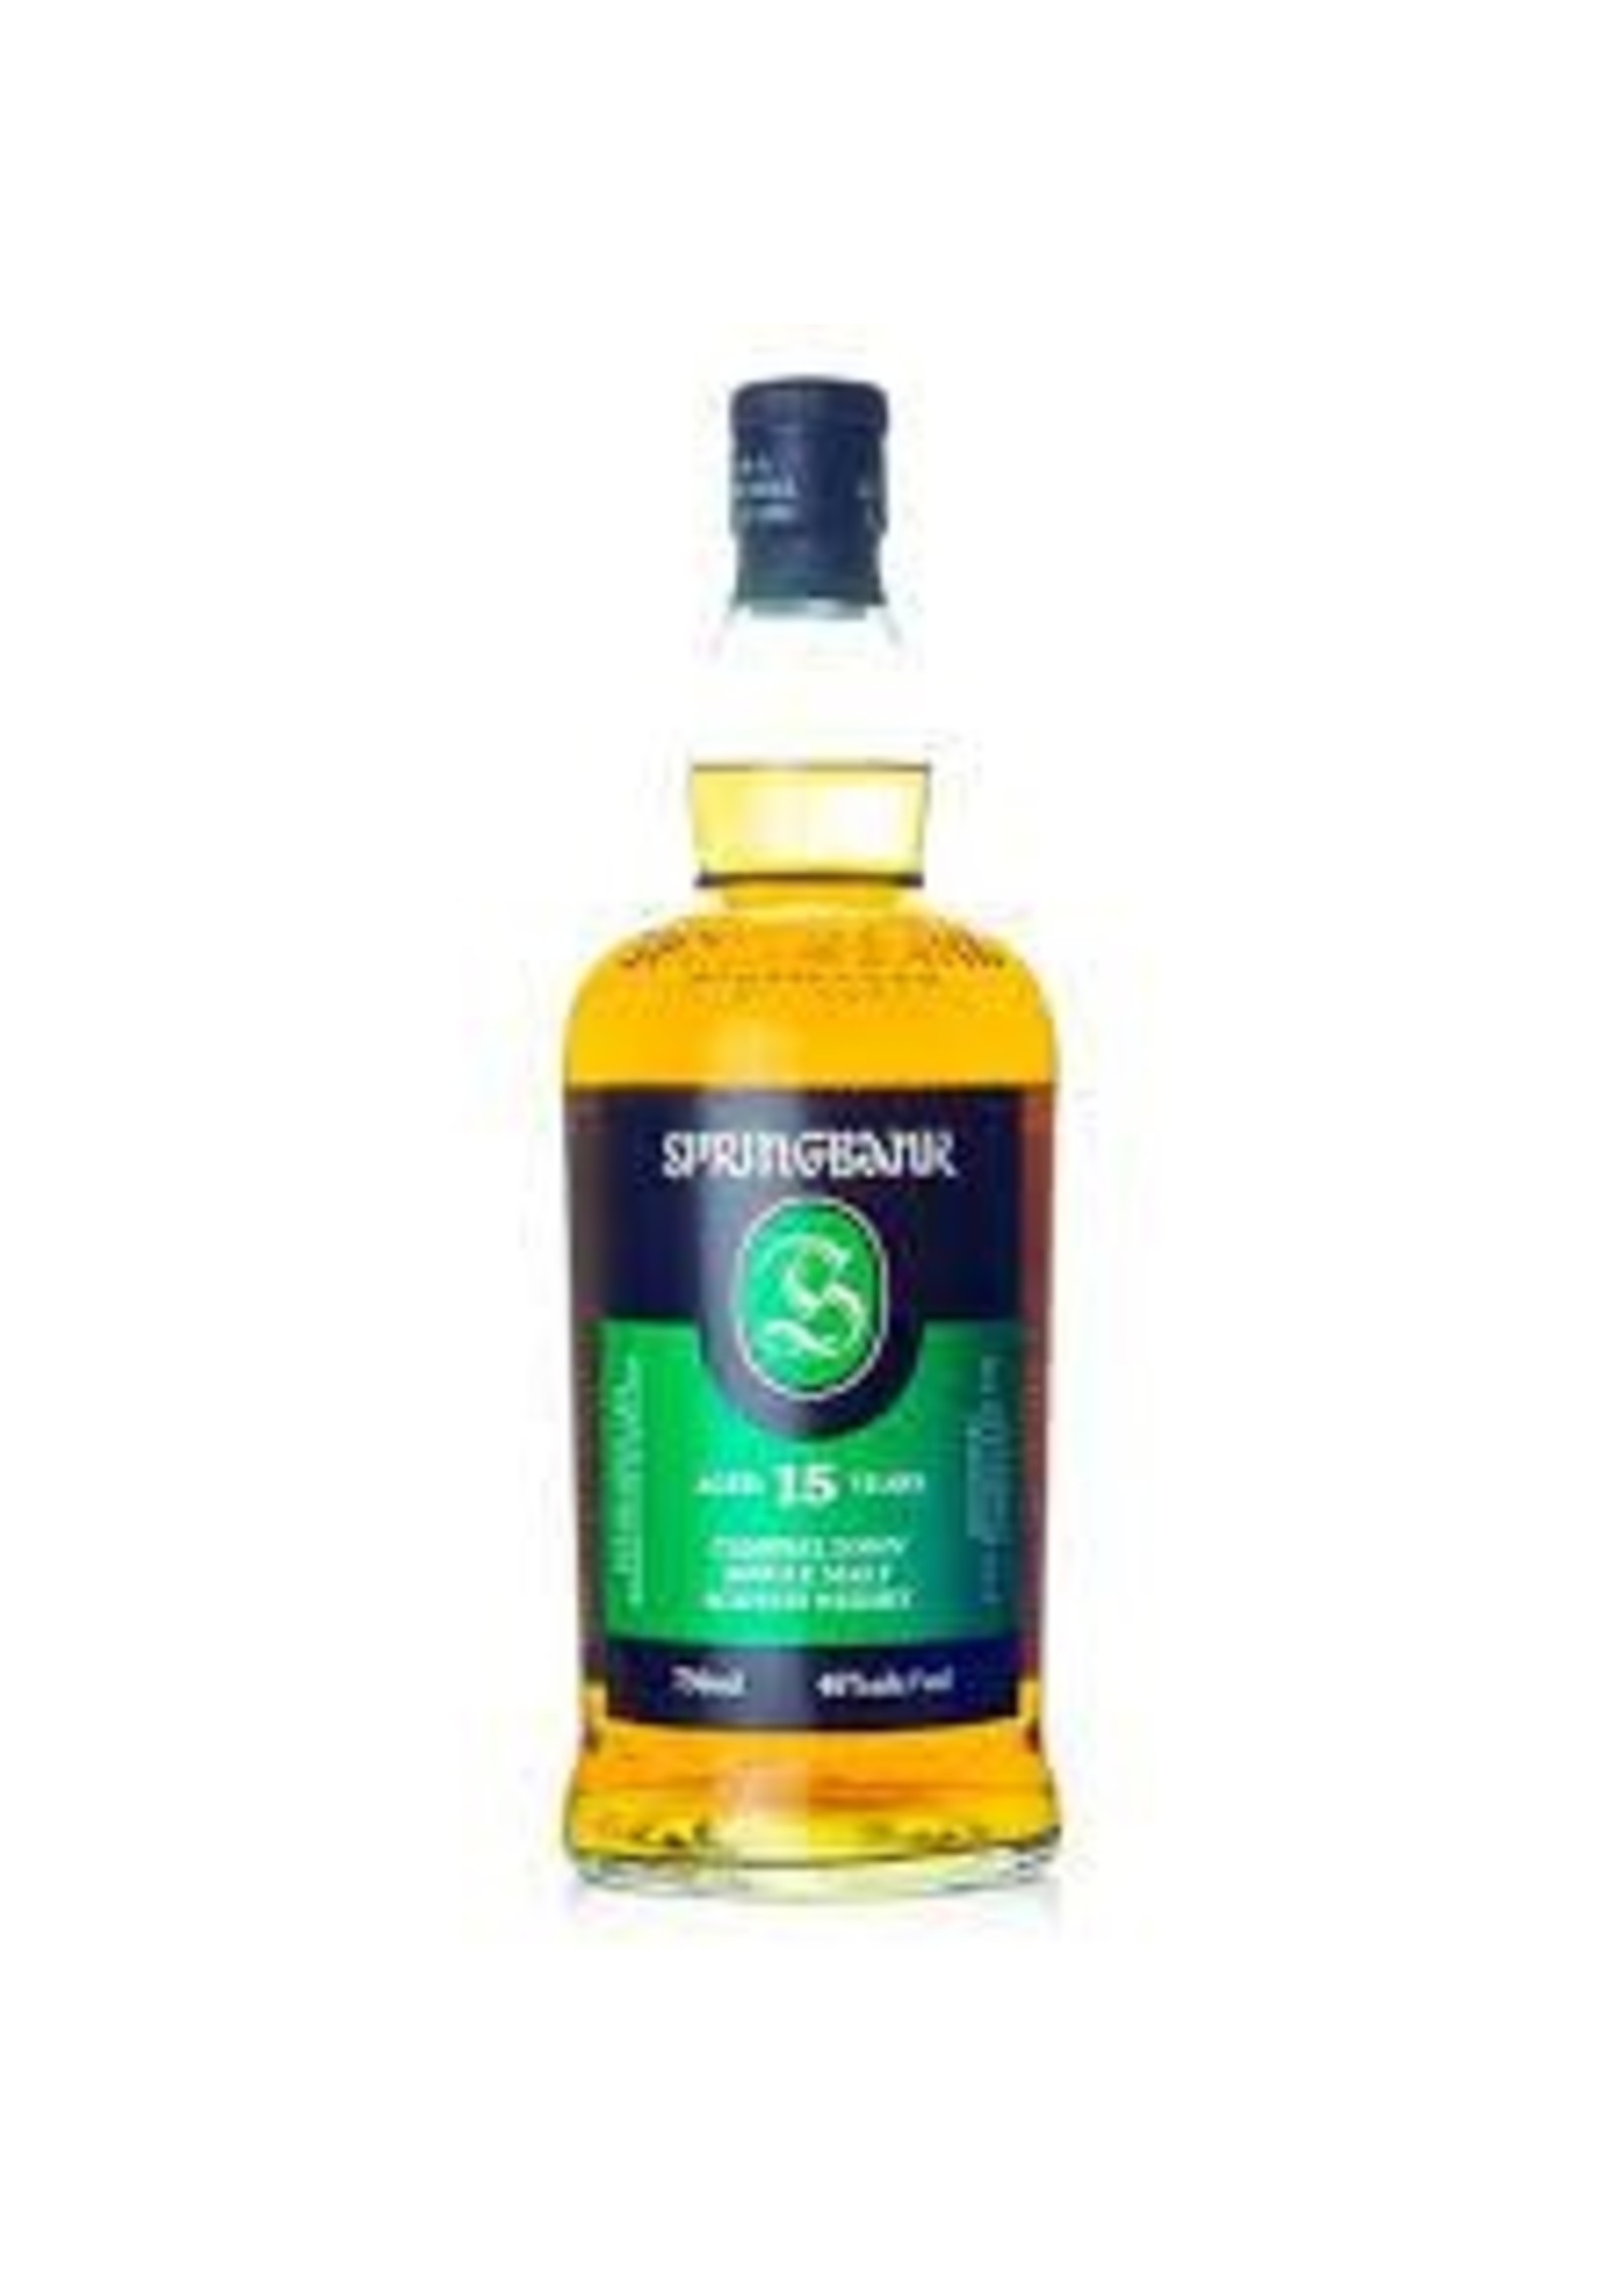 Springbank 15 yr old Scotch Whisky 750ml